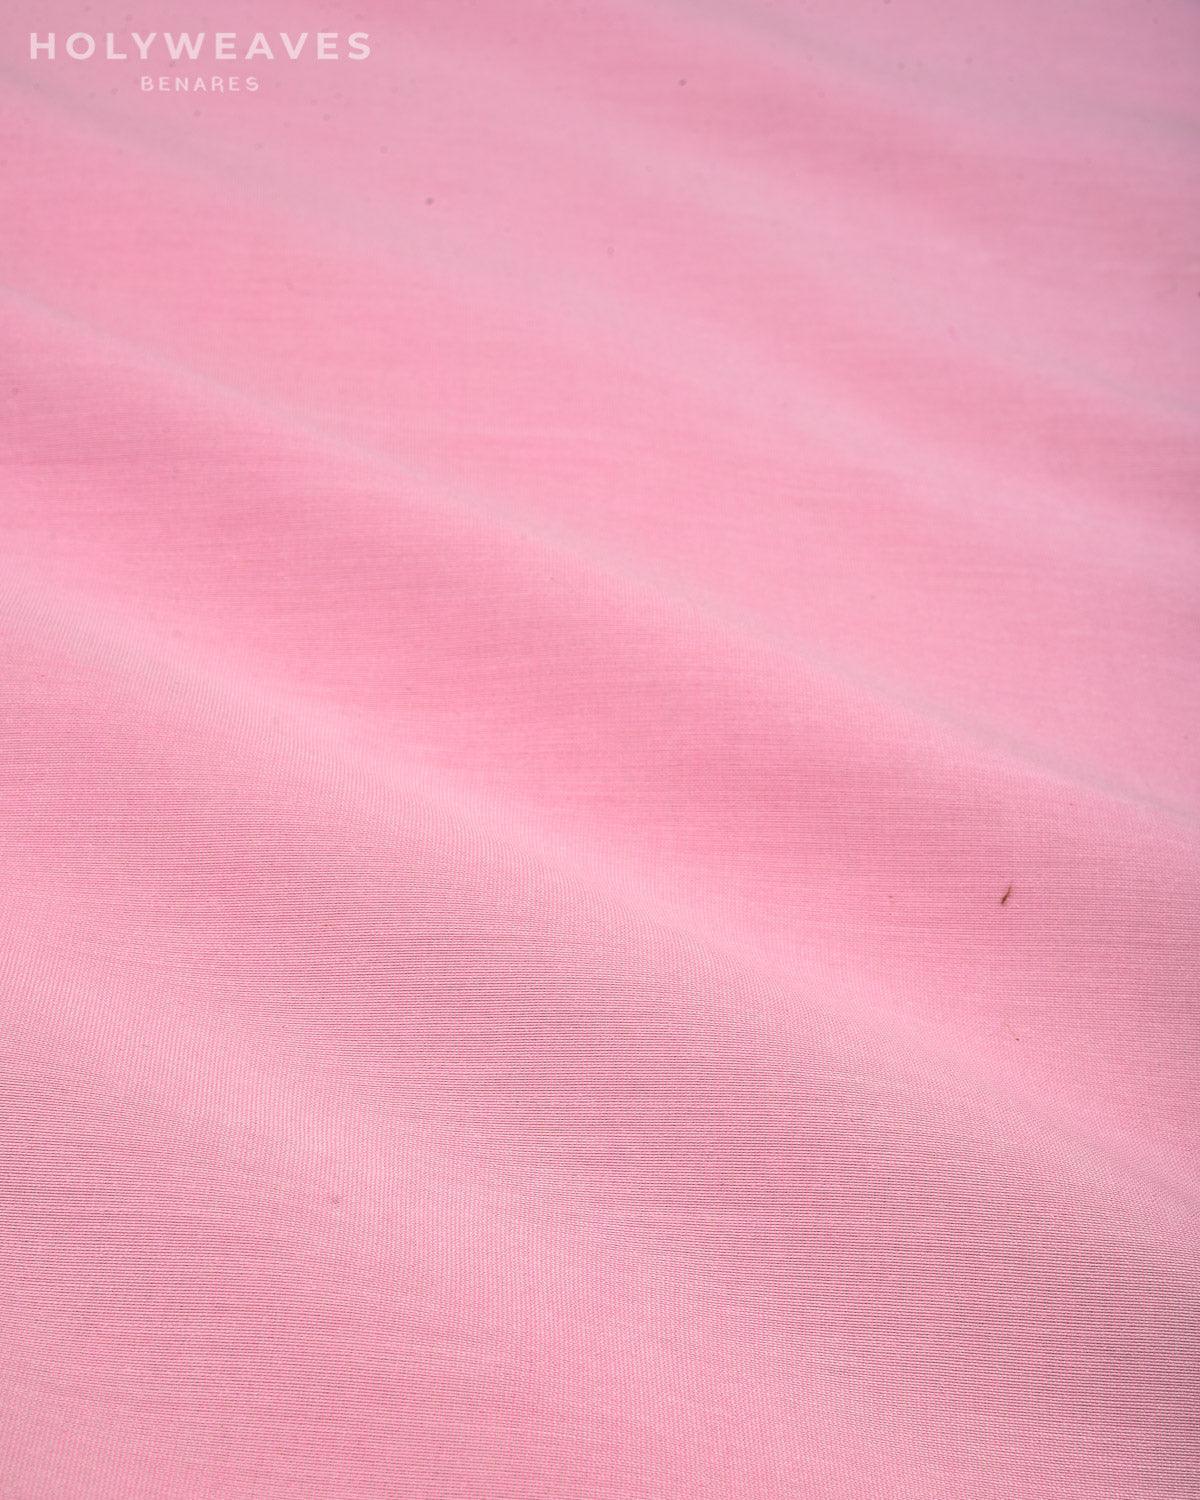 Cherry Blossom Pink Banarasi Pure Cotton Silk Fabric - By HolyWeaves, Benares